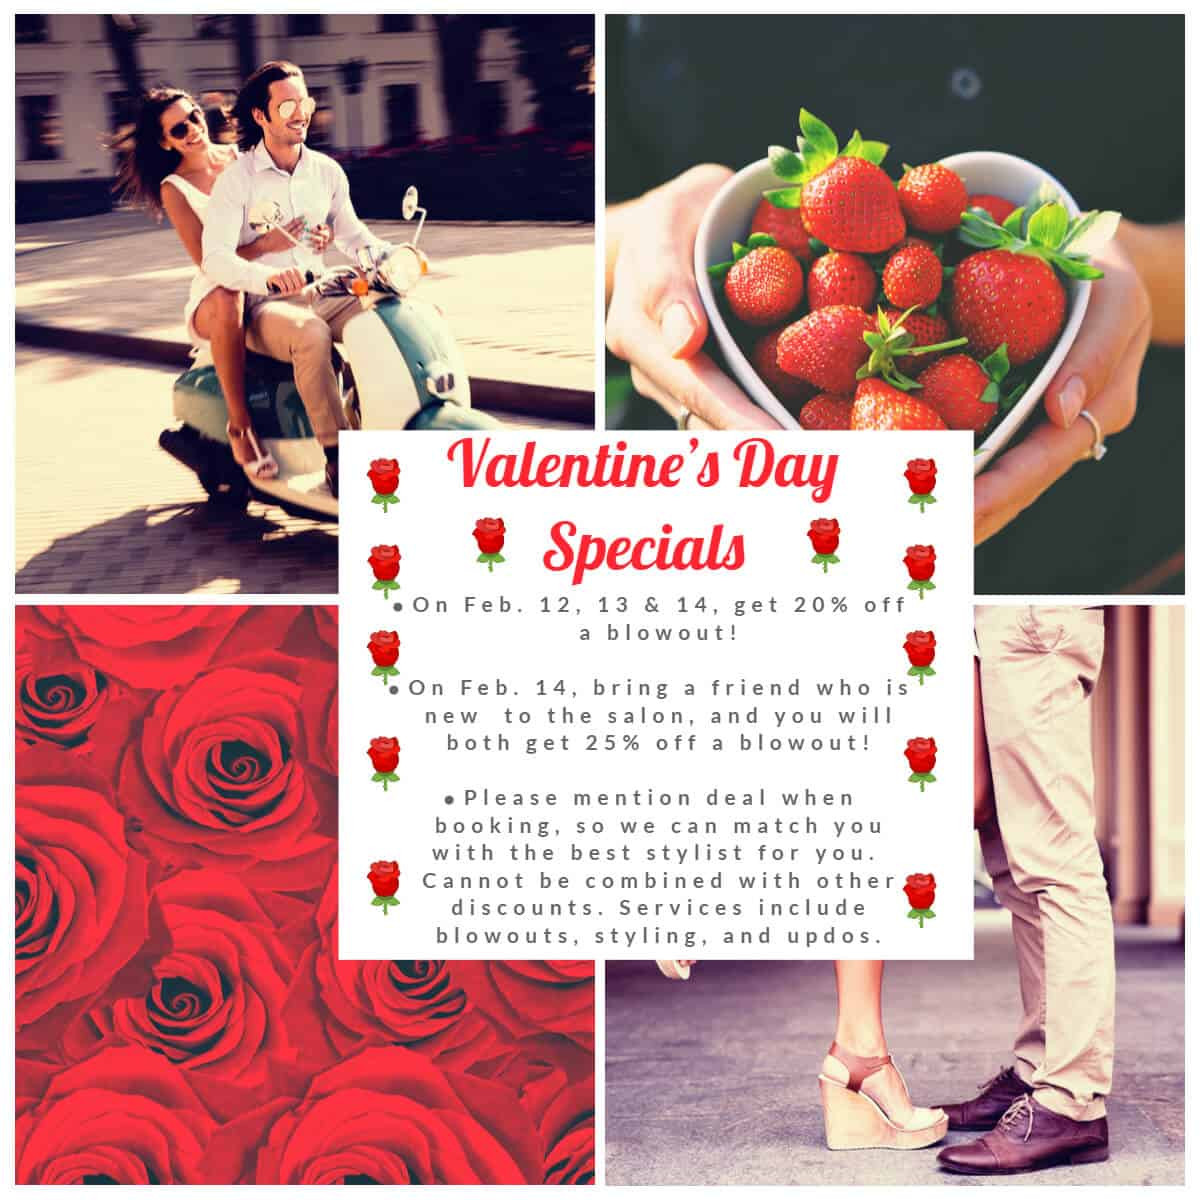 Valentines Day Ideas 2019
 Valentines Day 2019 Specials and Gift Ideas Amaci Salon